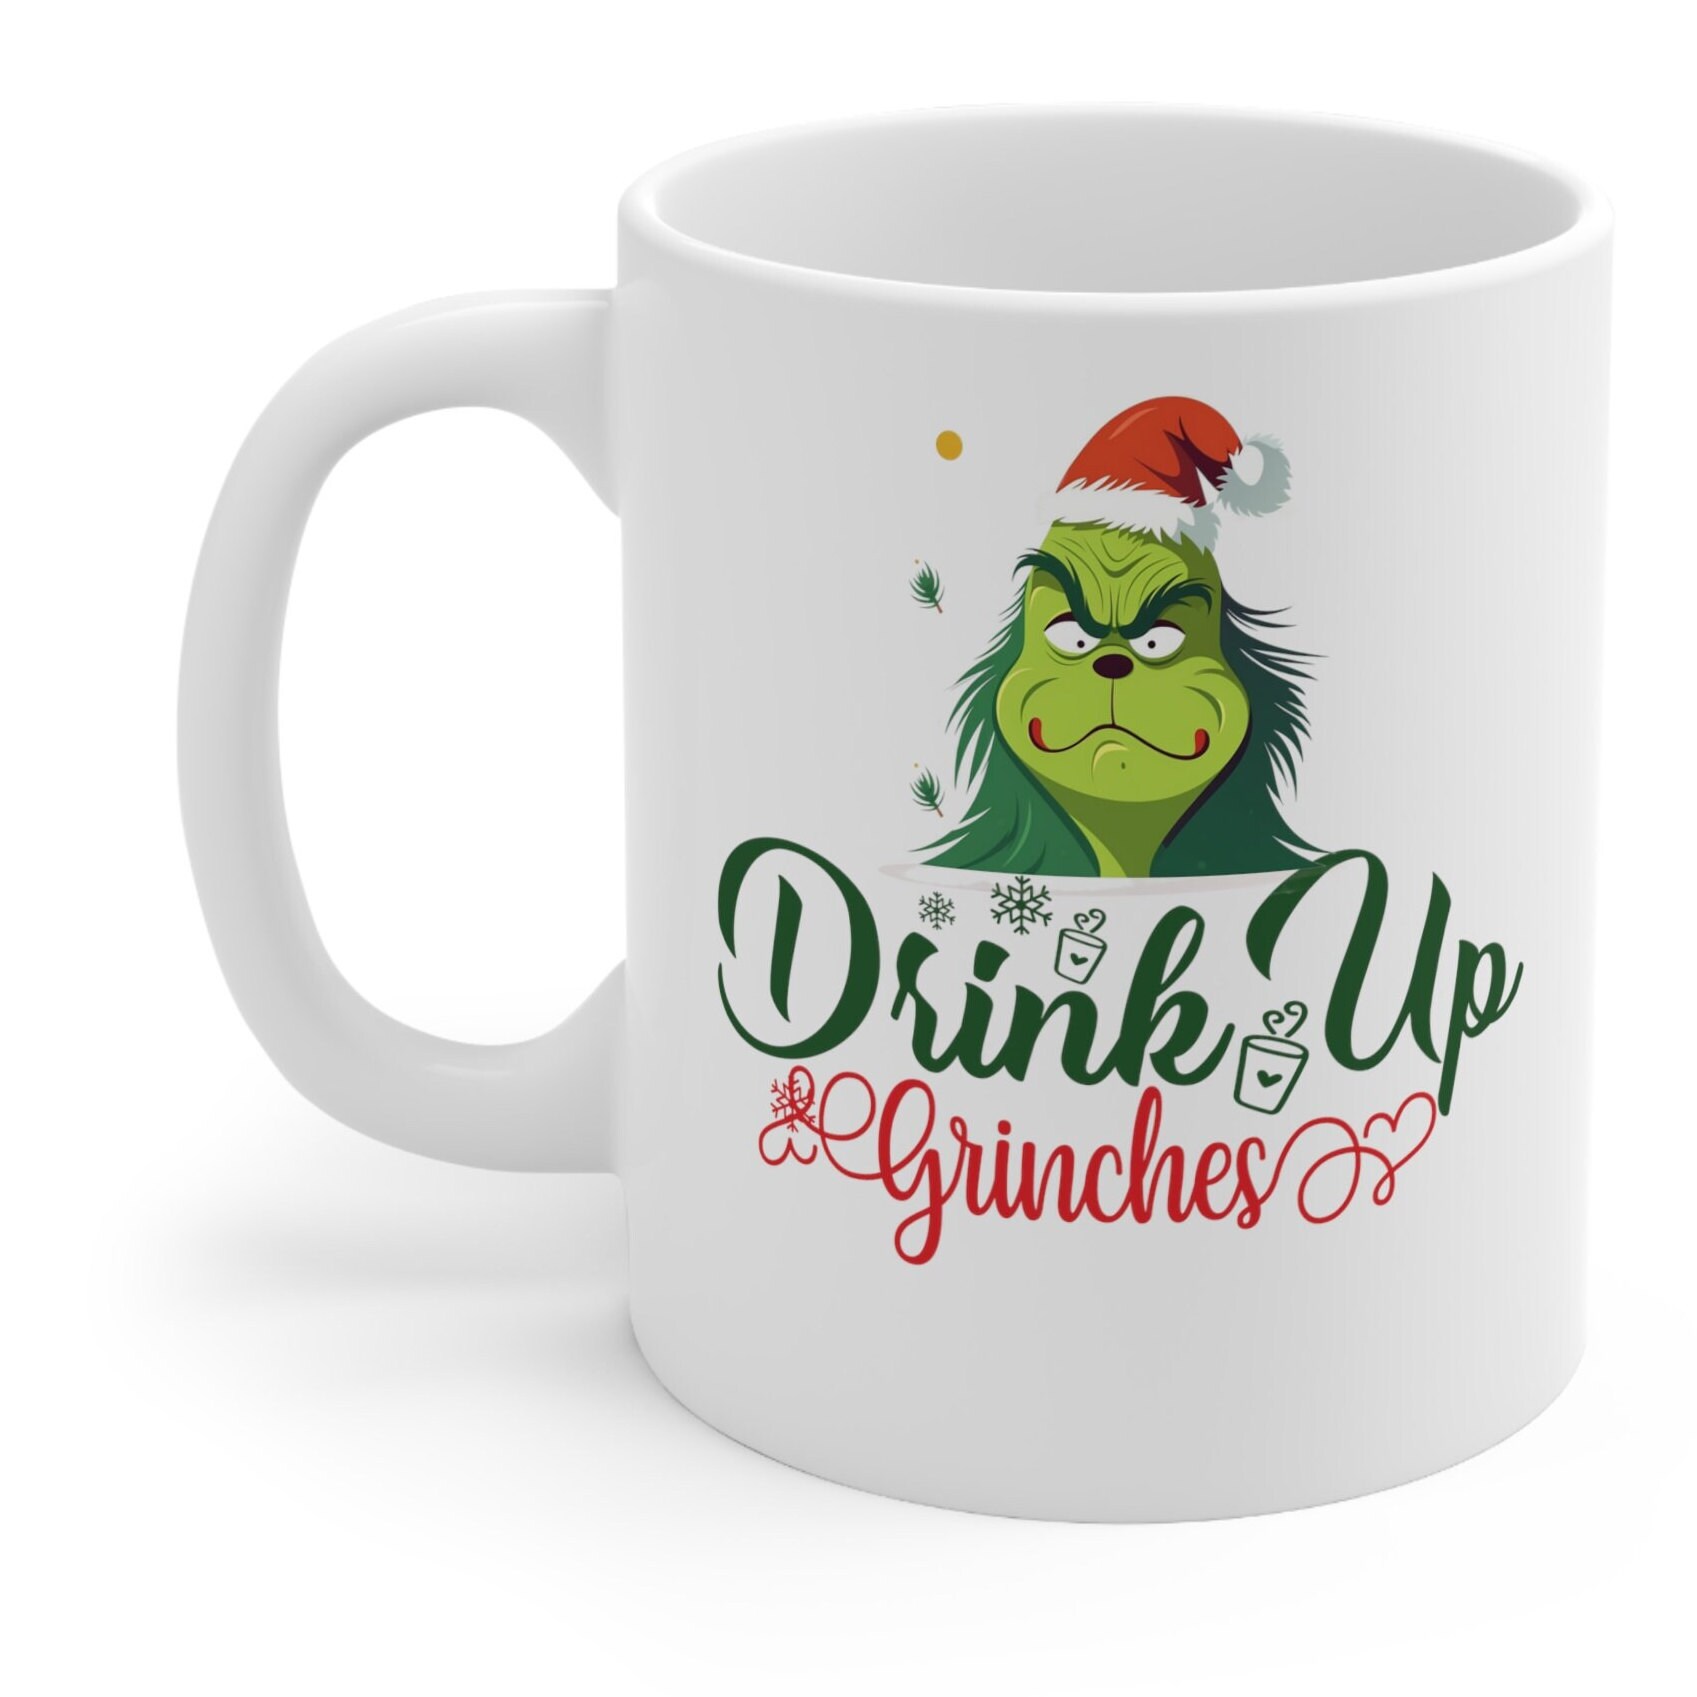 Drink Up Grinch Mug